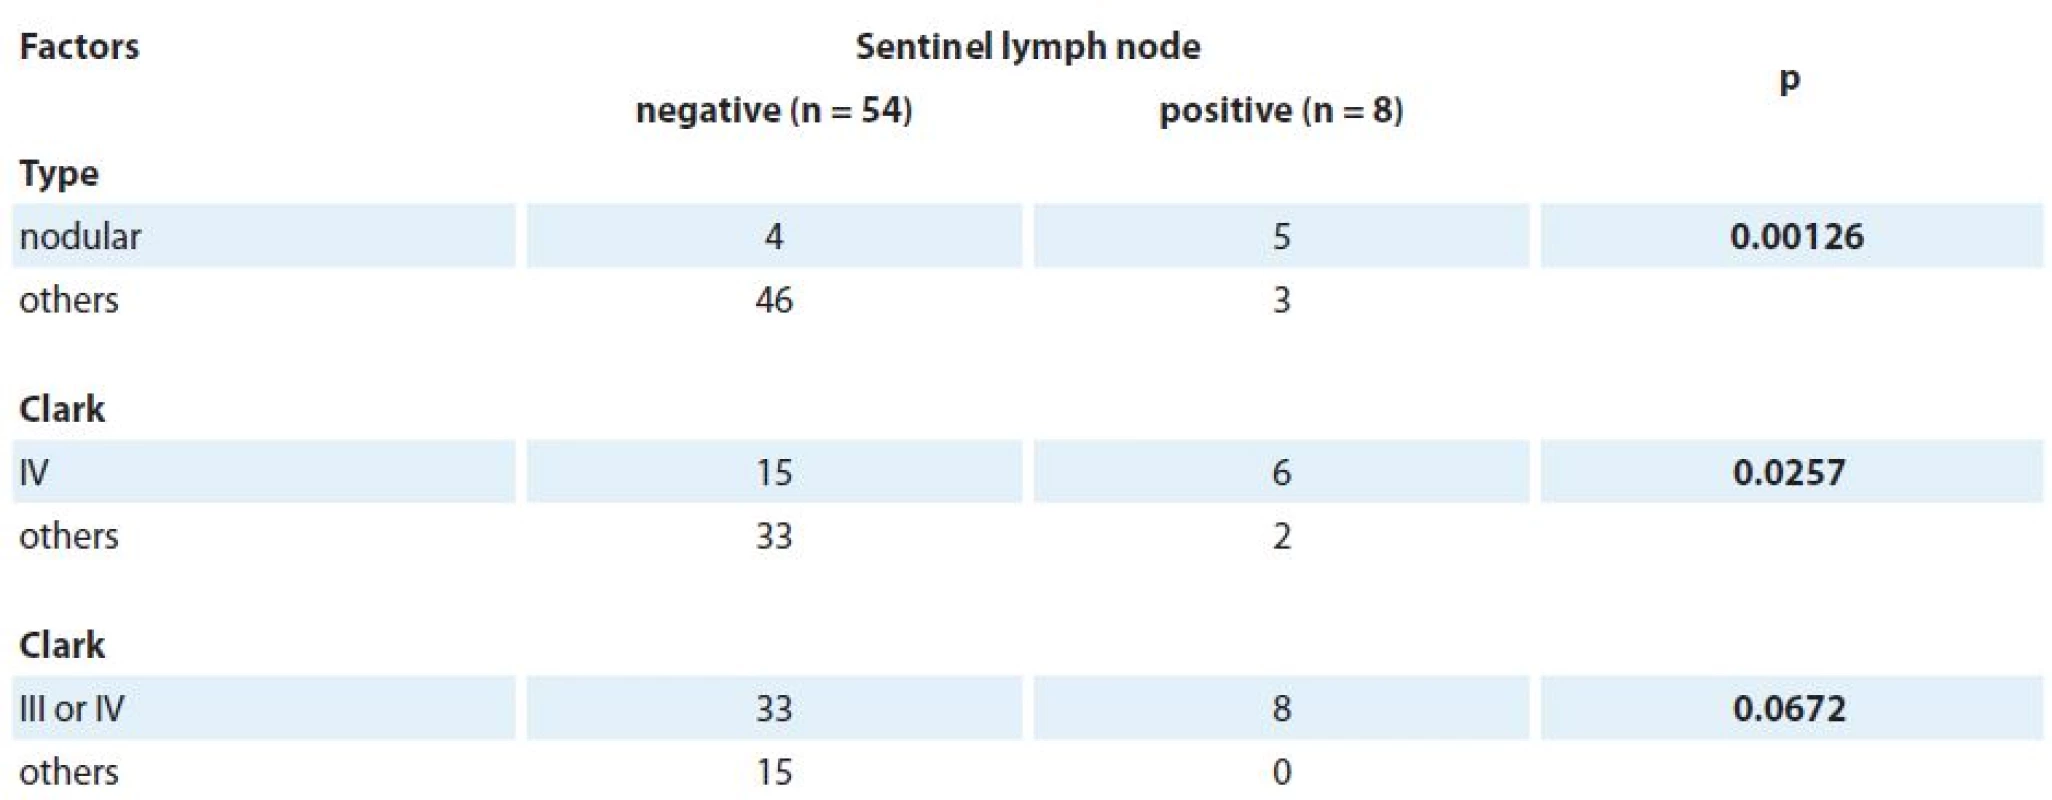 Factors associated with lymph node positivity.